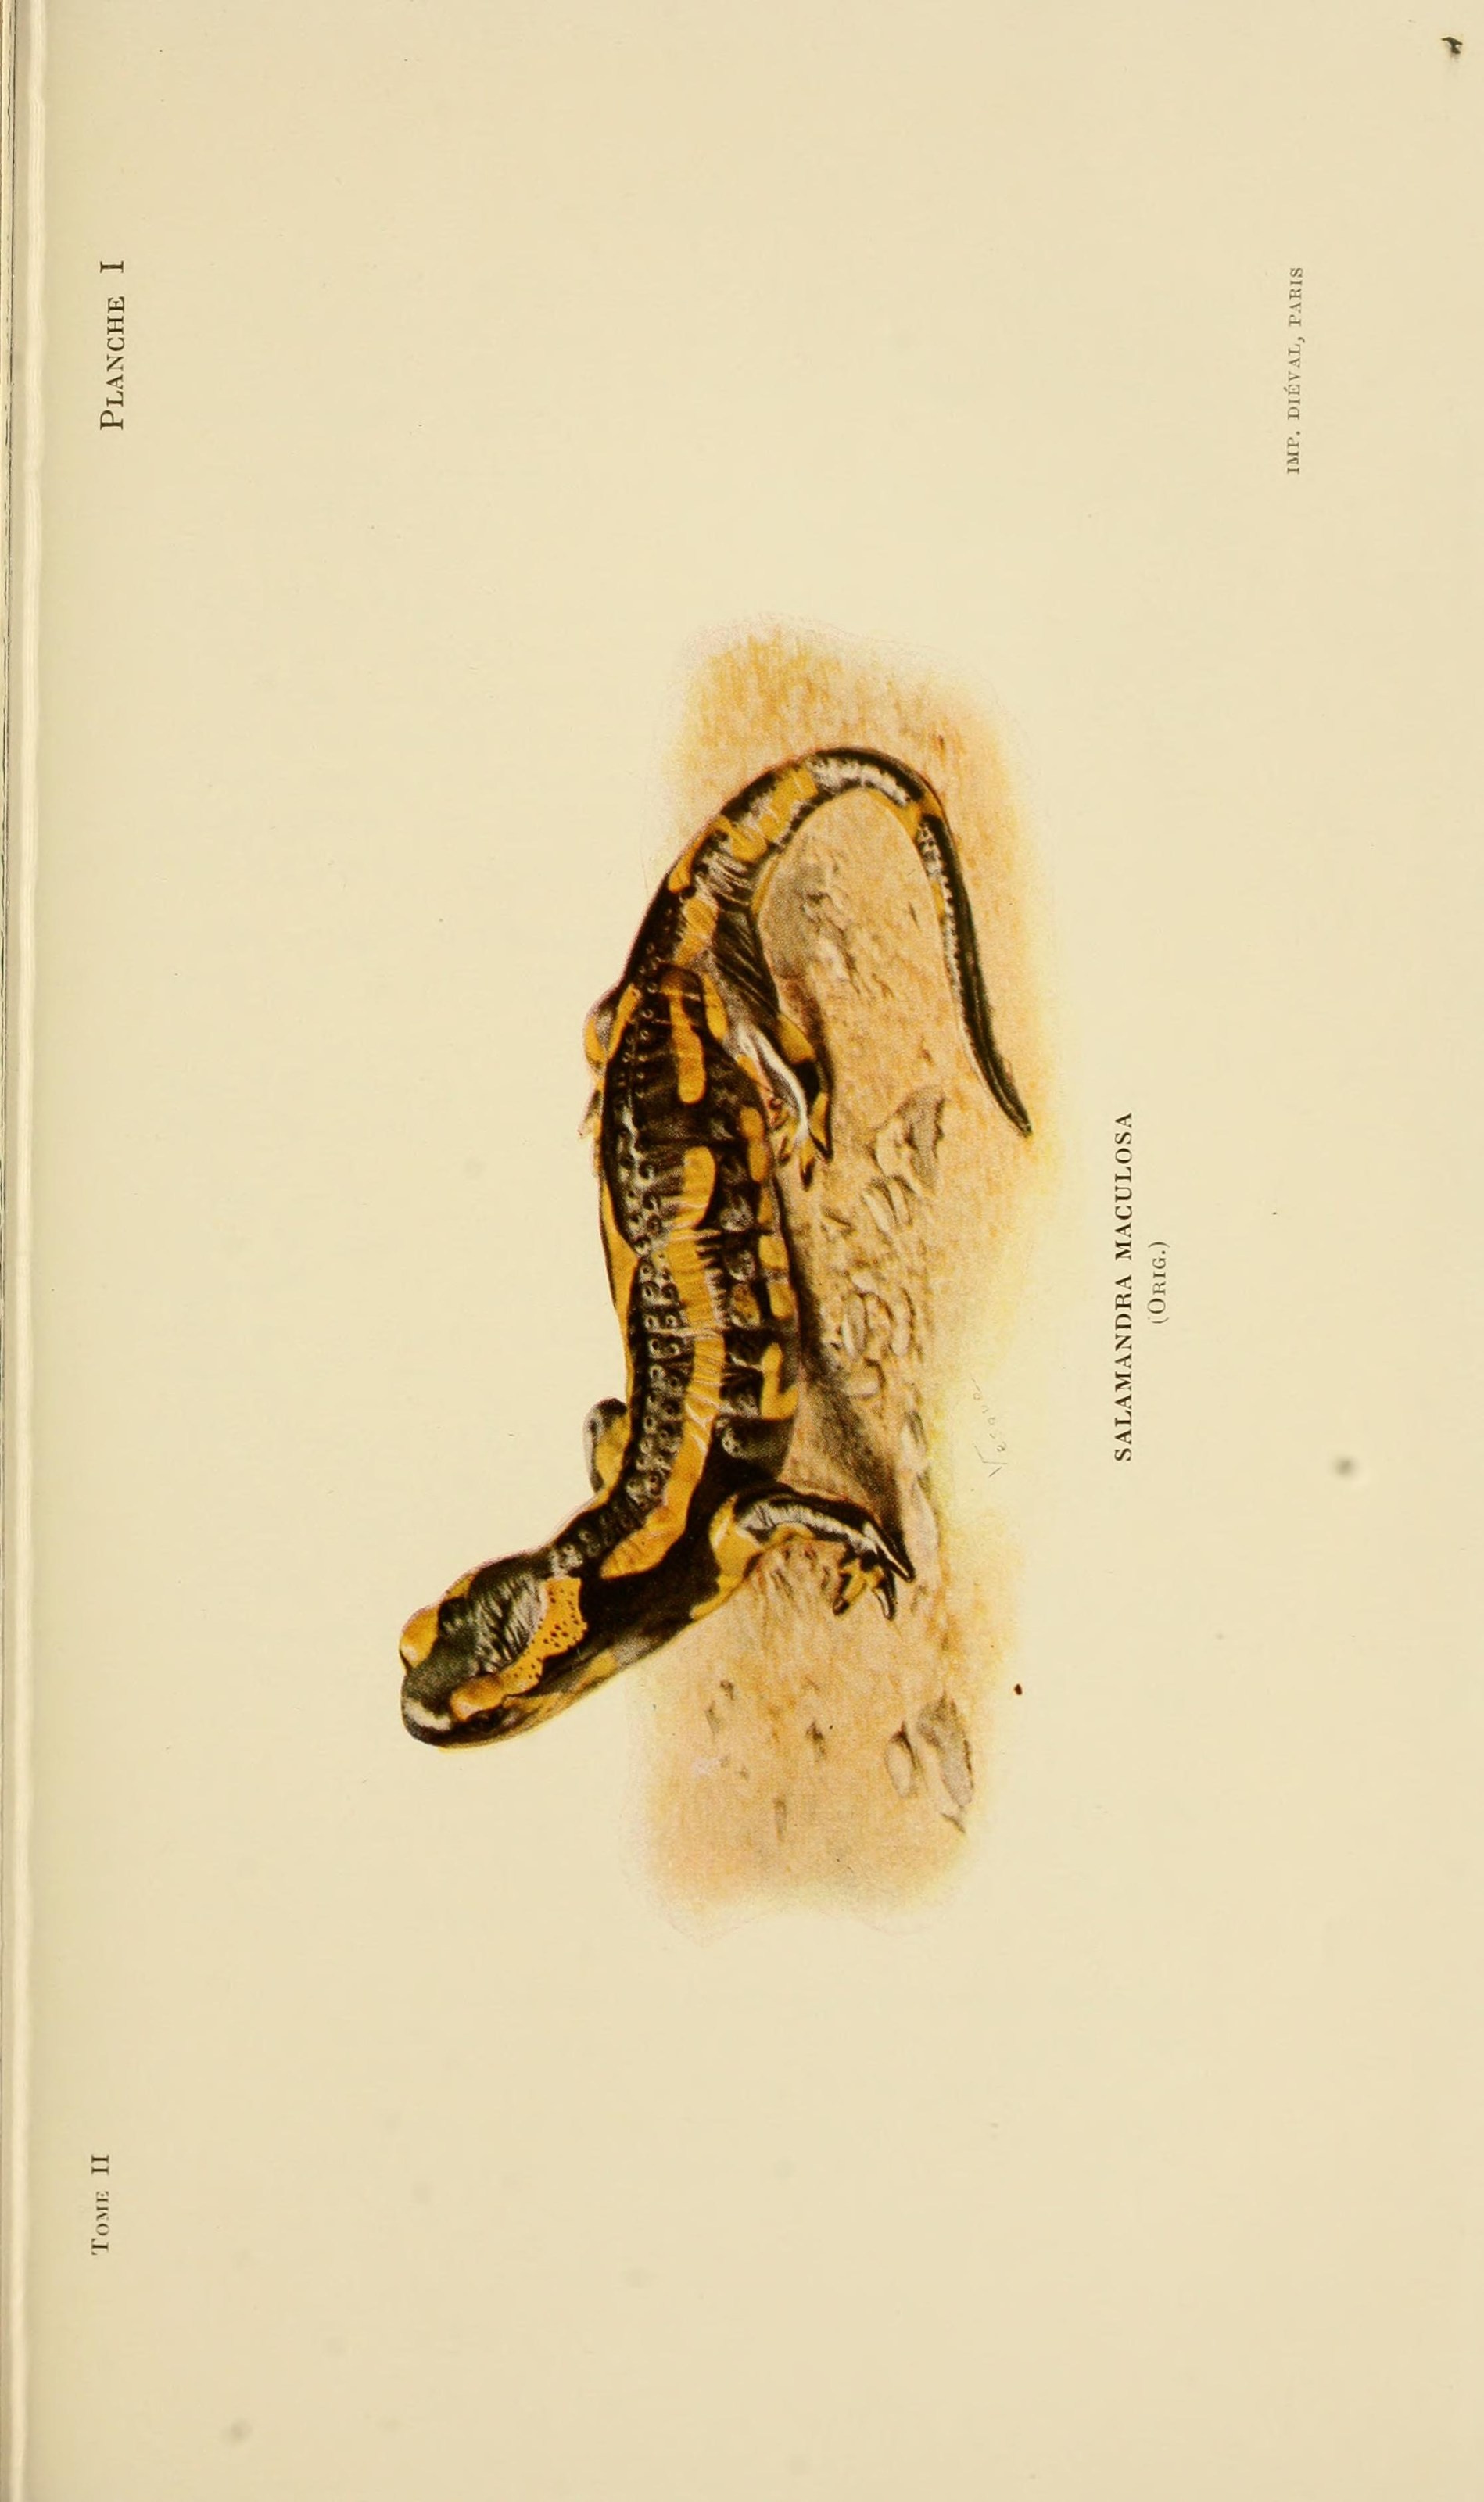 Image of Fire Salamander